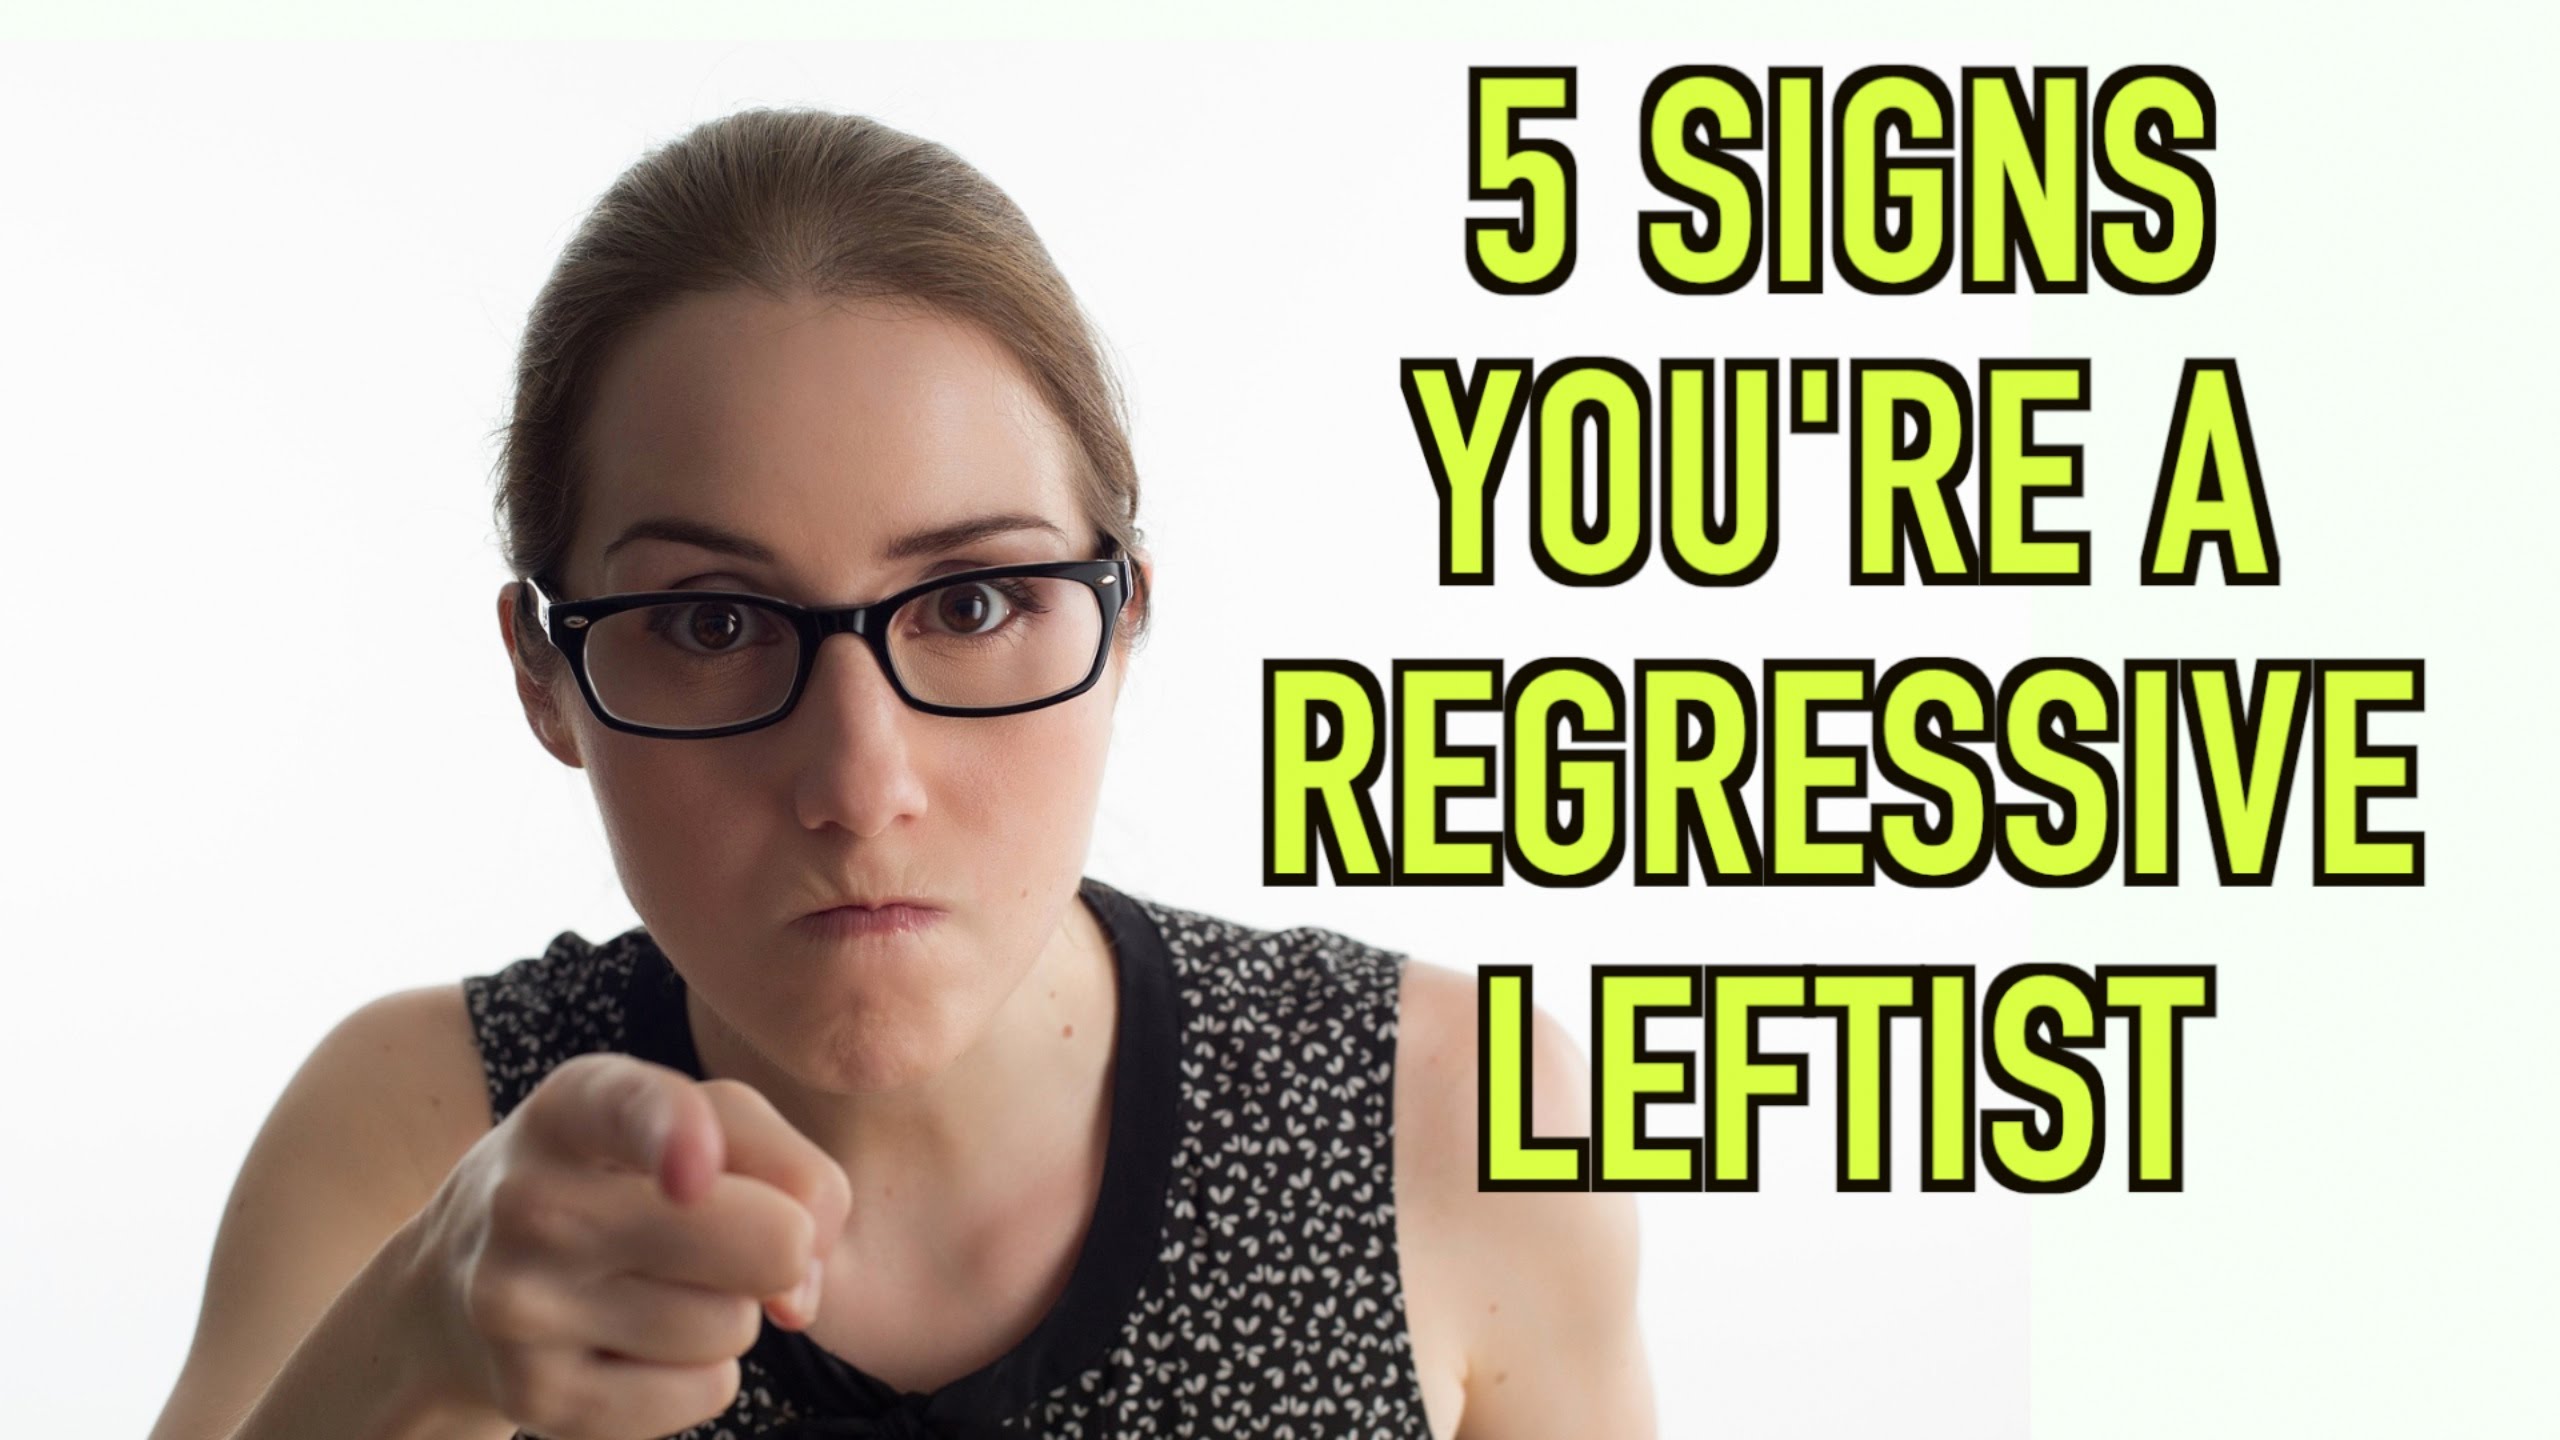 Are you a regressive Leftist?